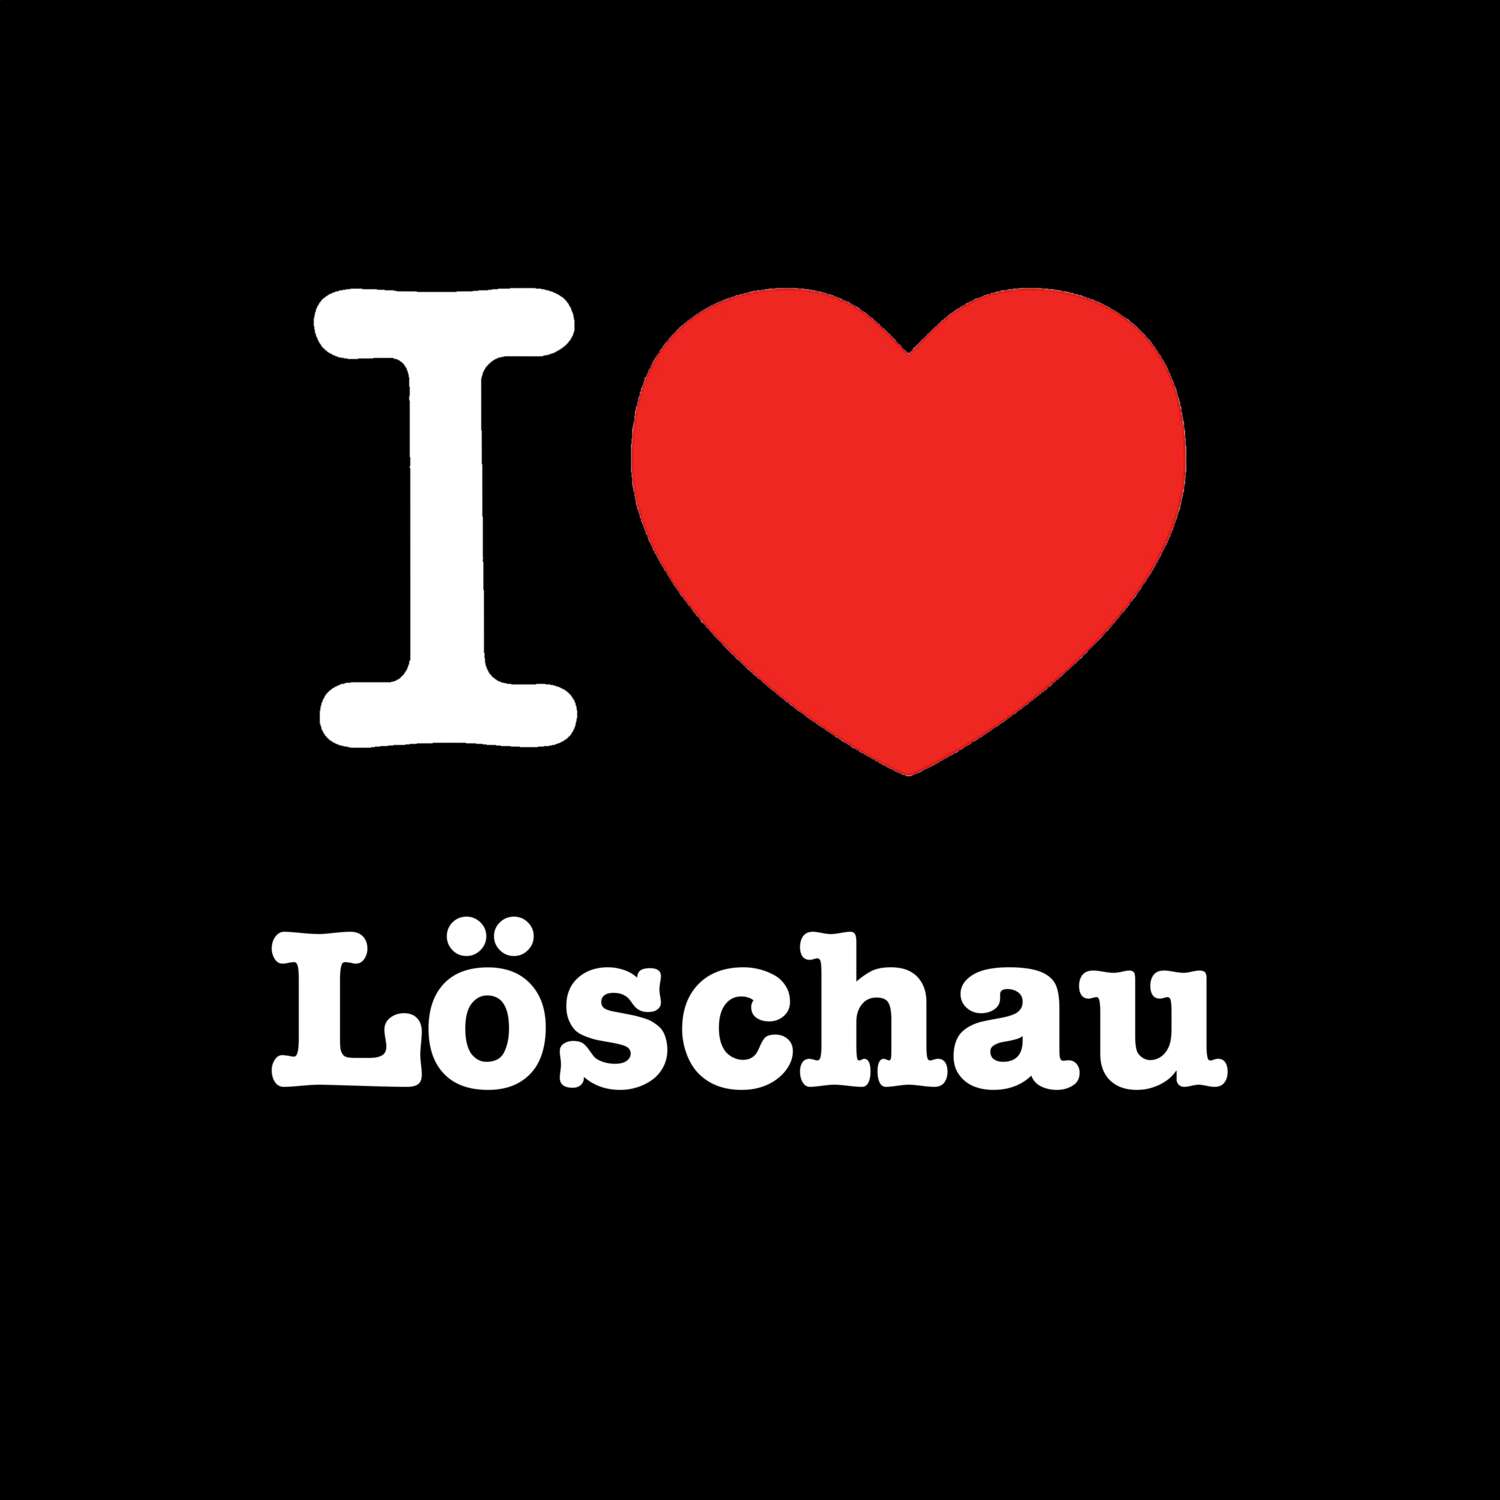 Löschau T-Shirt »I love«